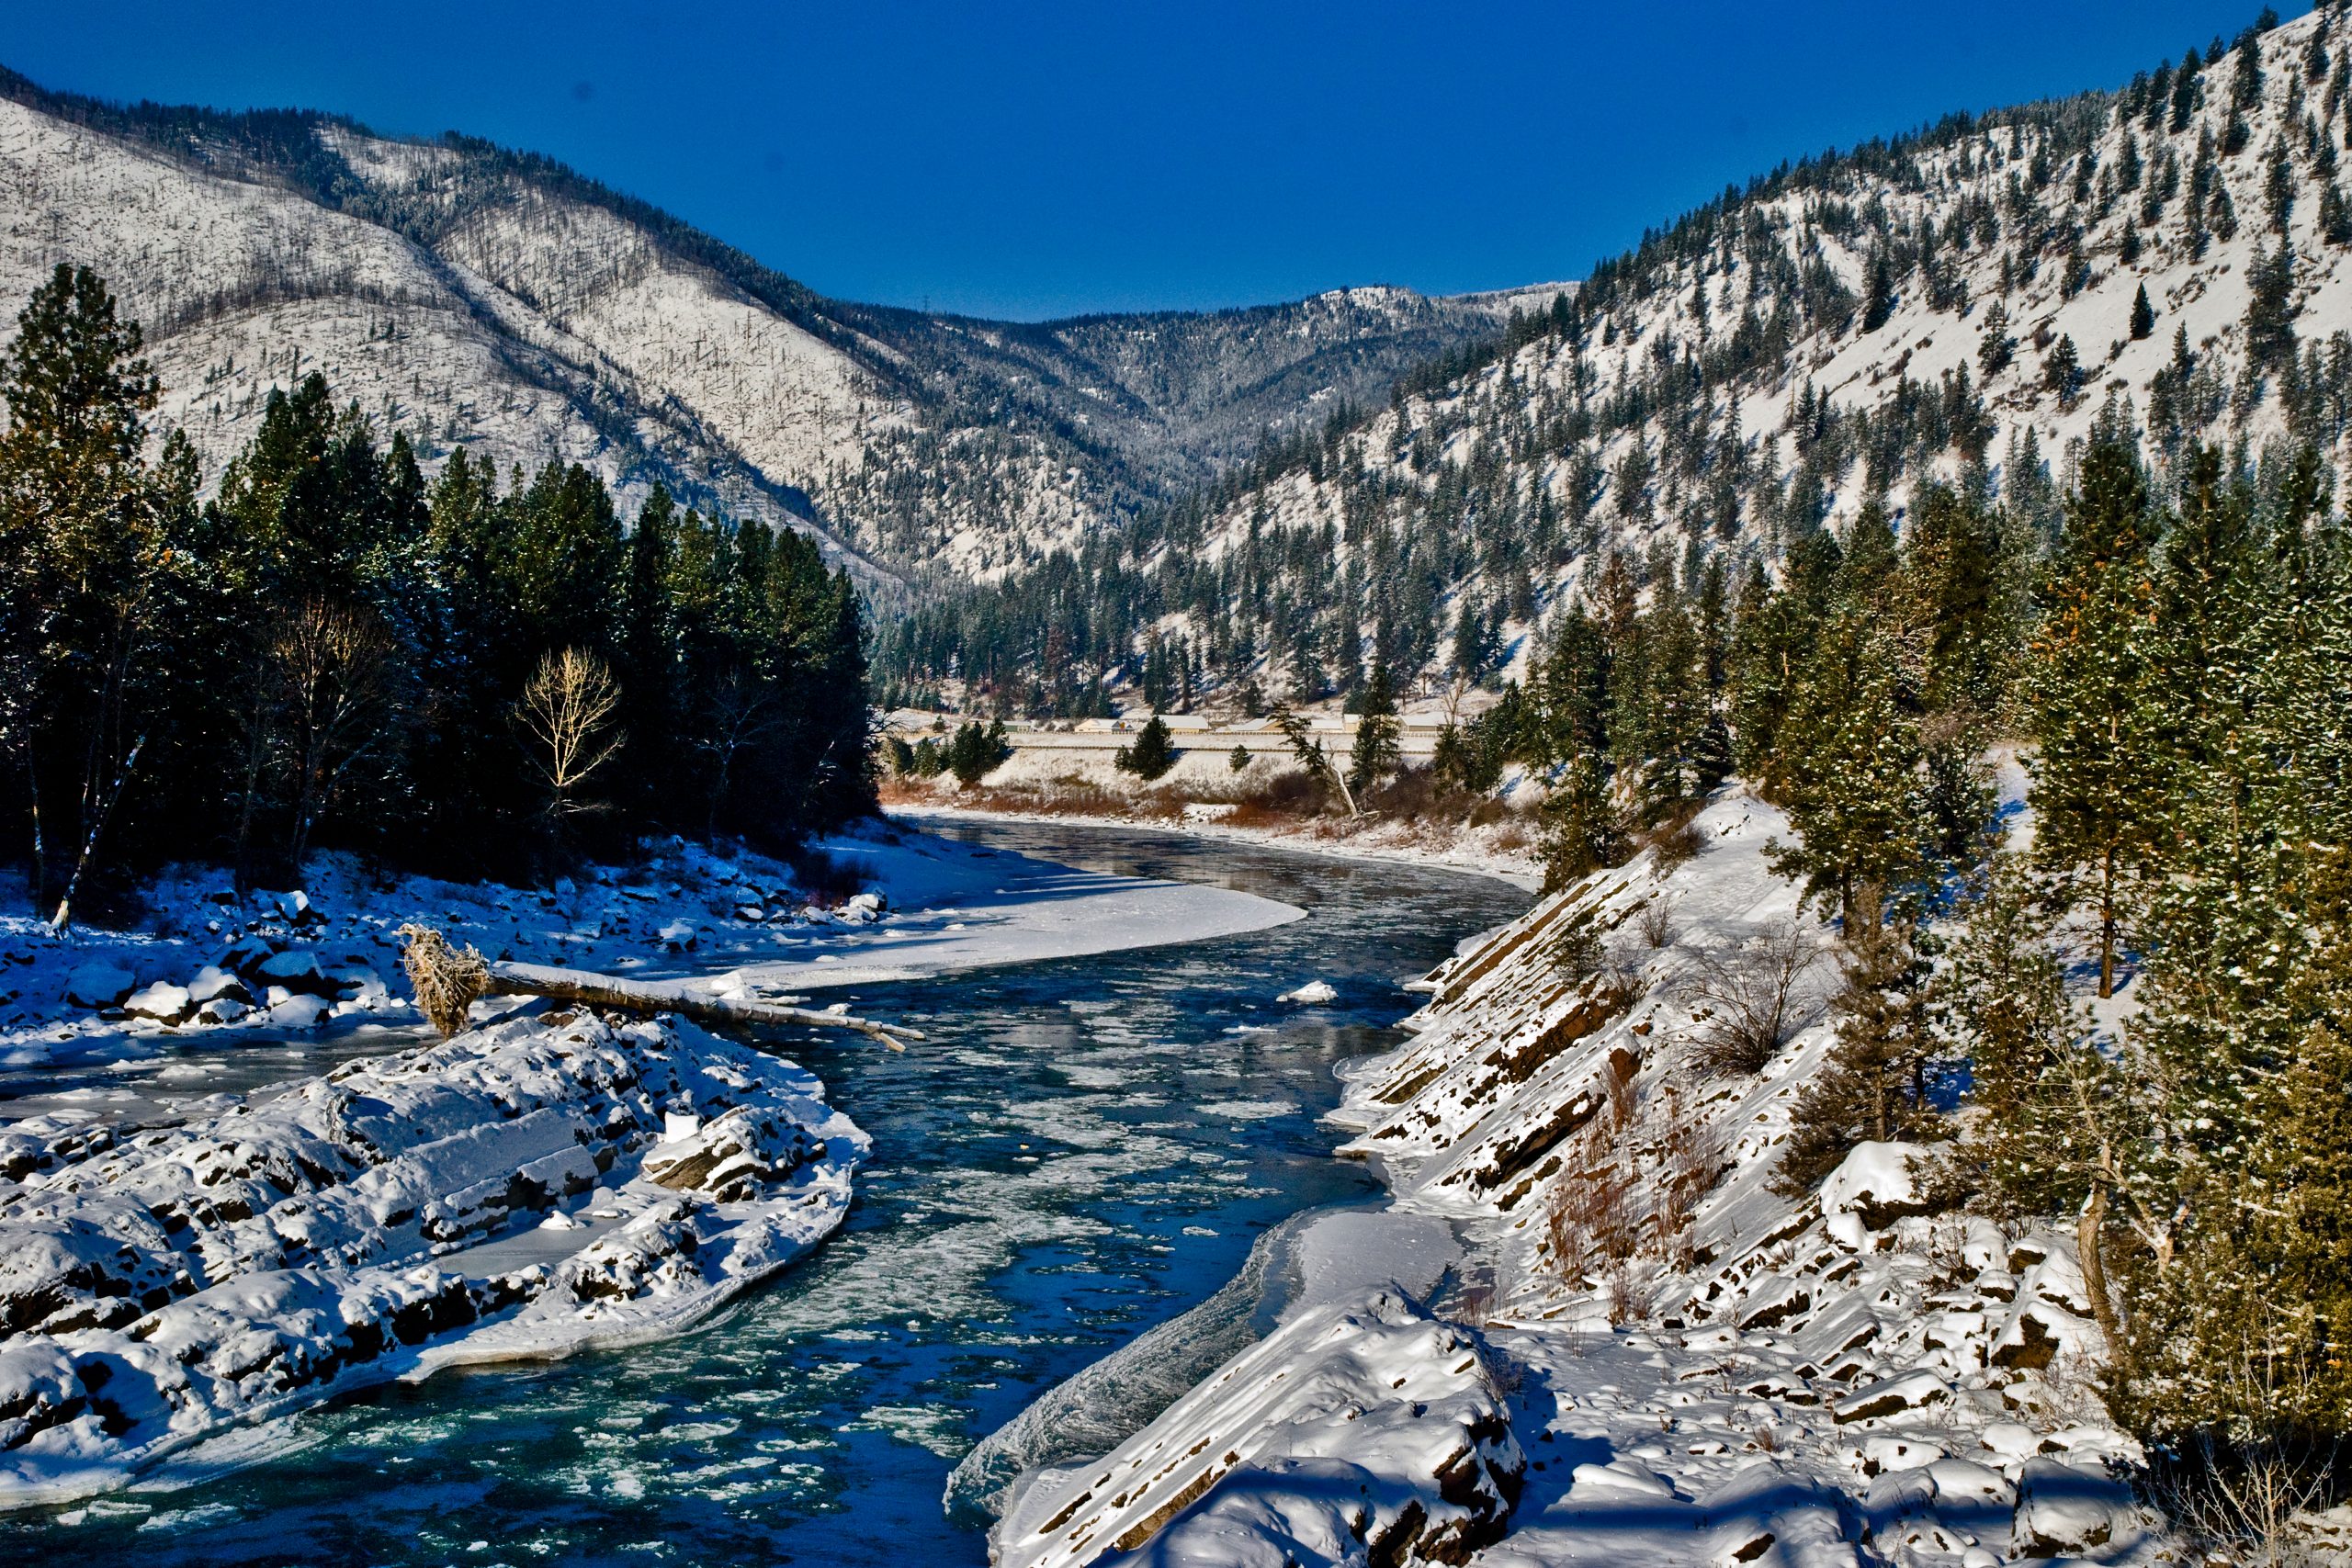 A winter scene of the Clark Fork River near Alberton, Montana